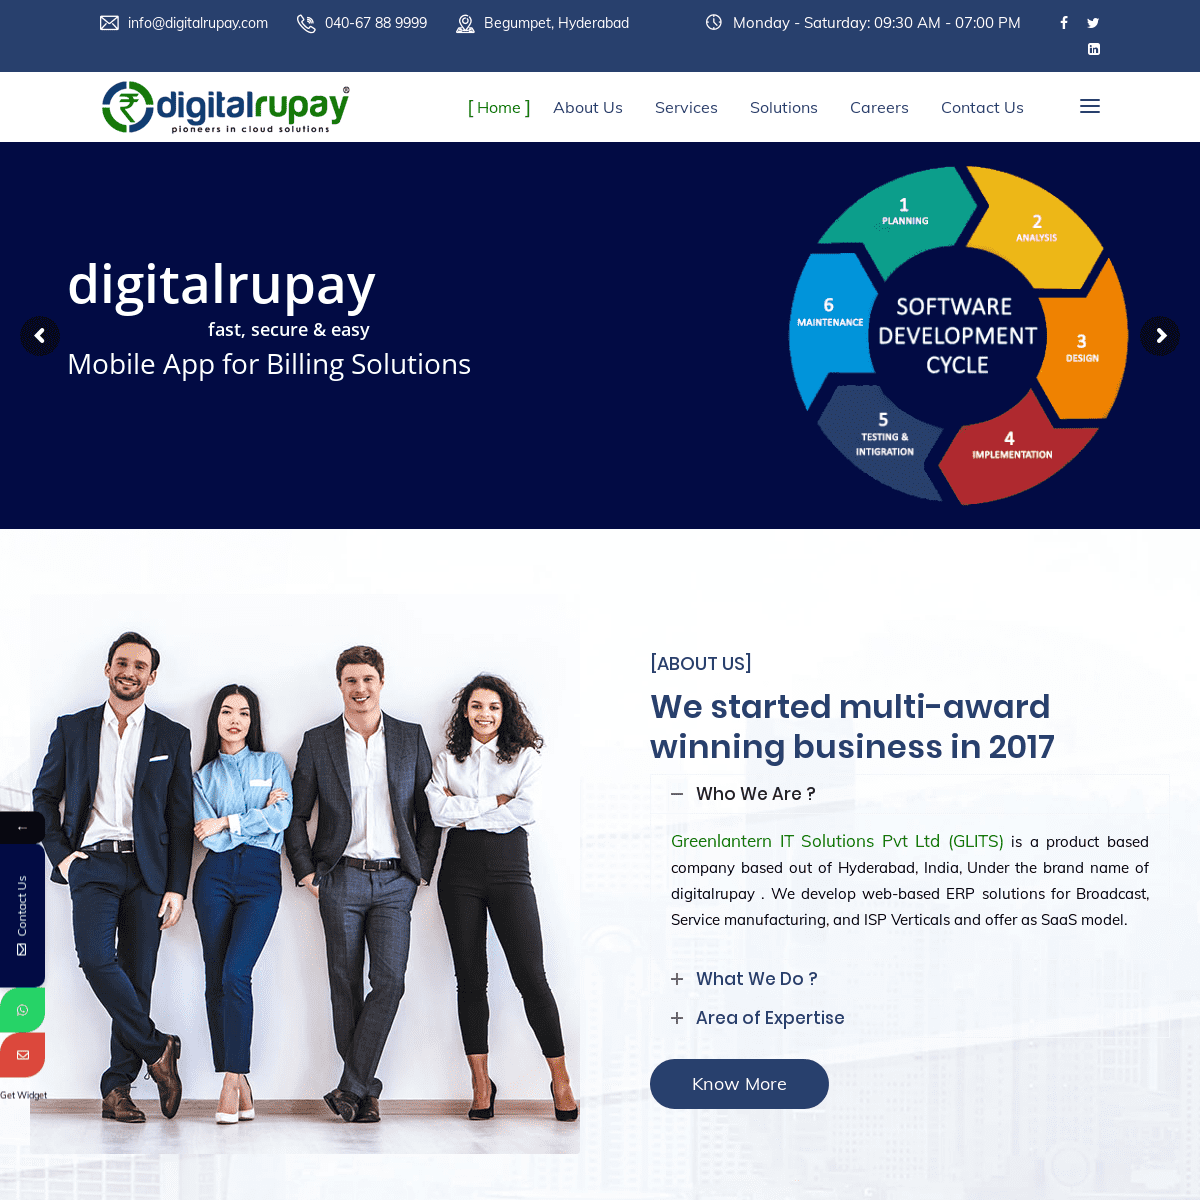 A complete backup of digitalrupay.com